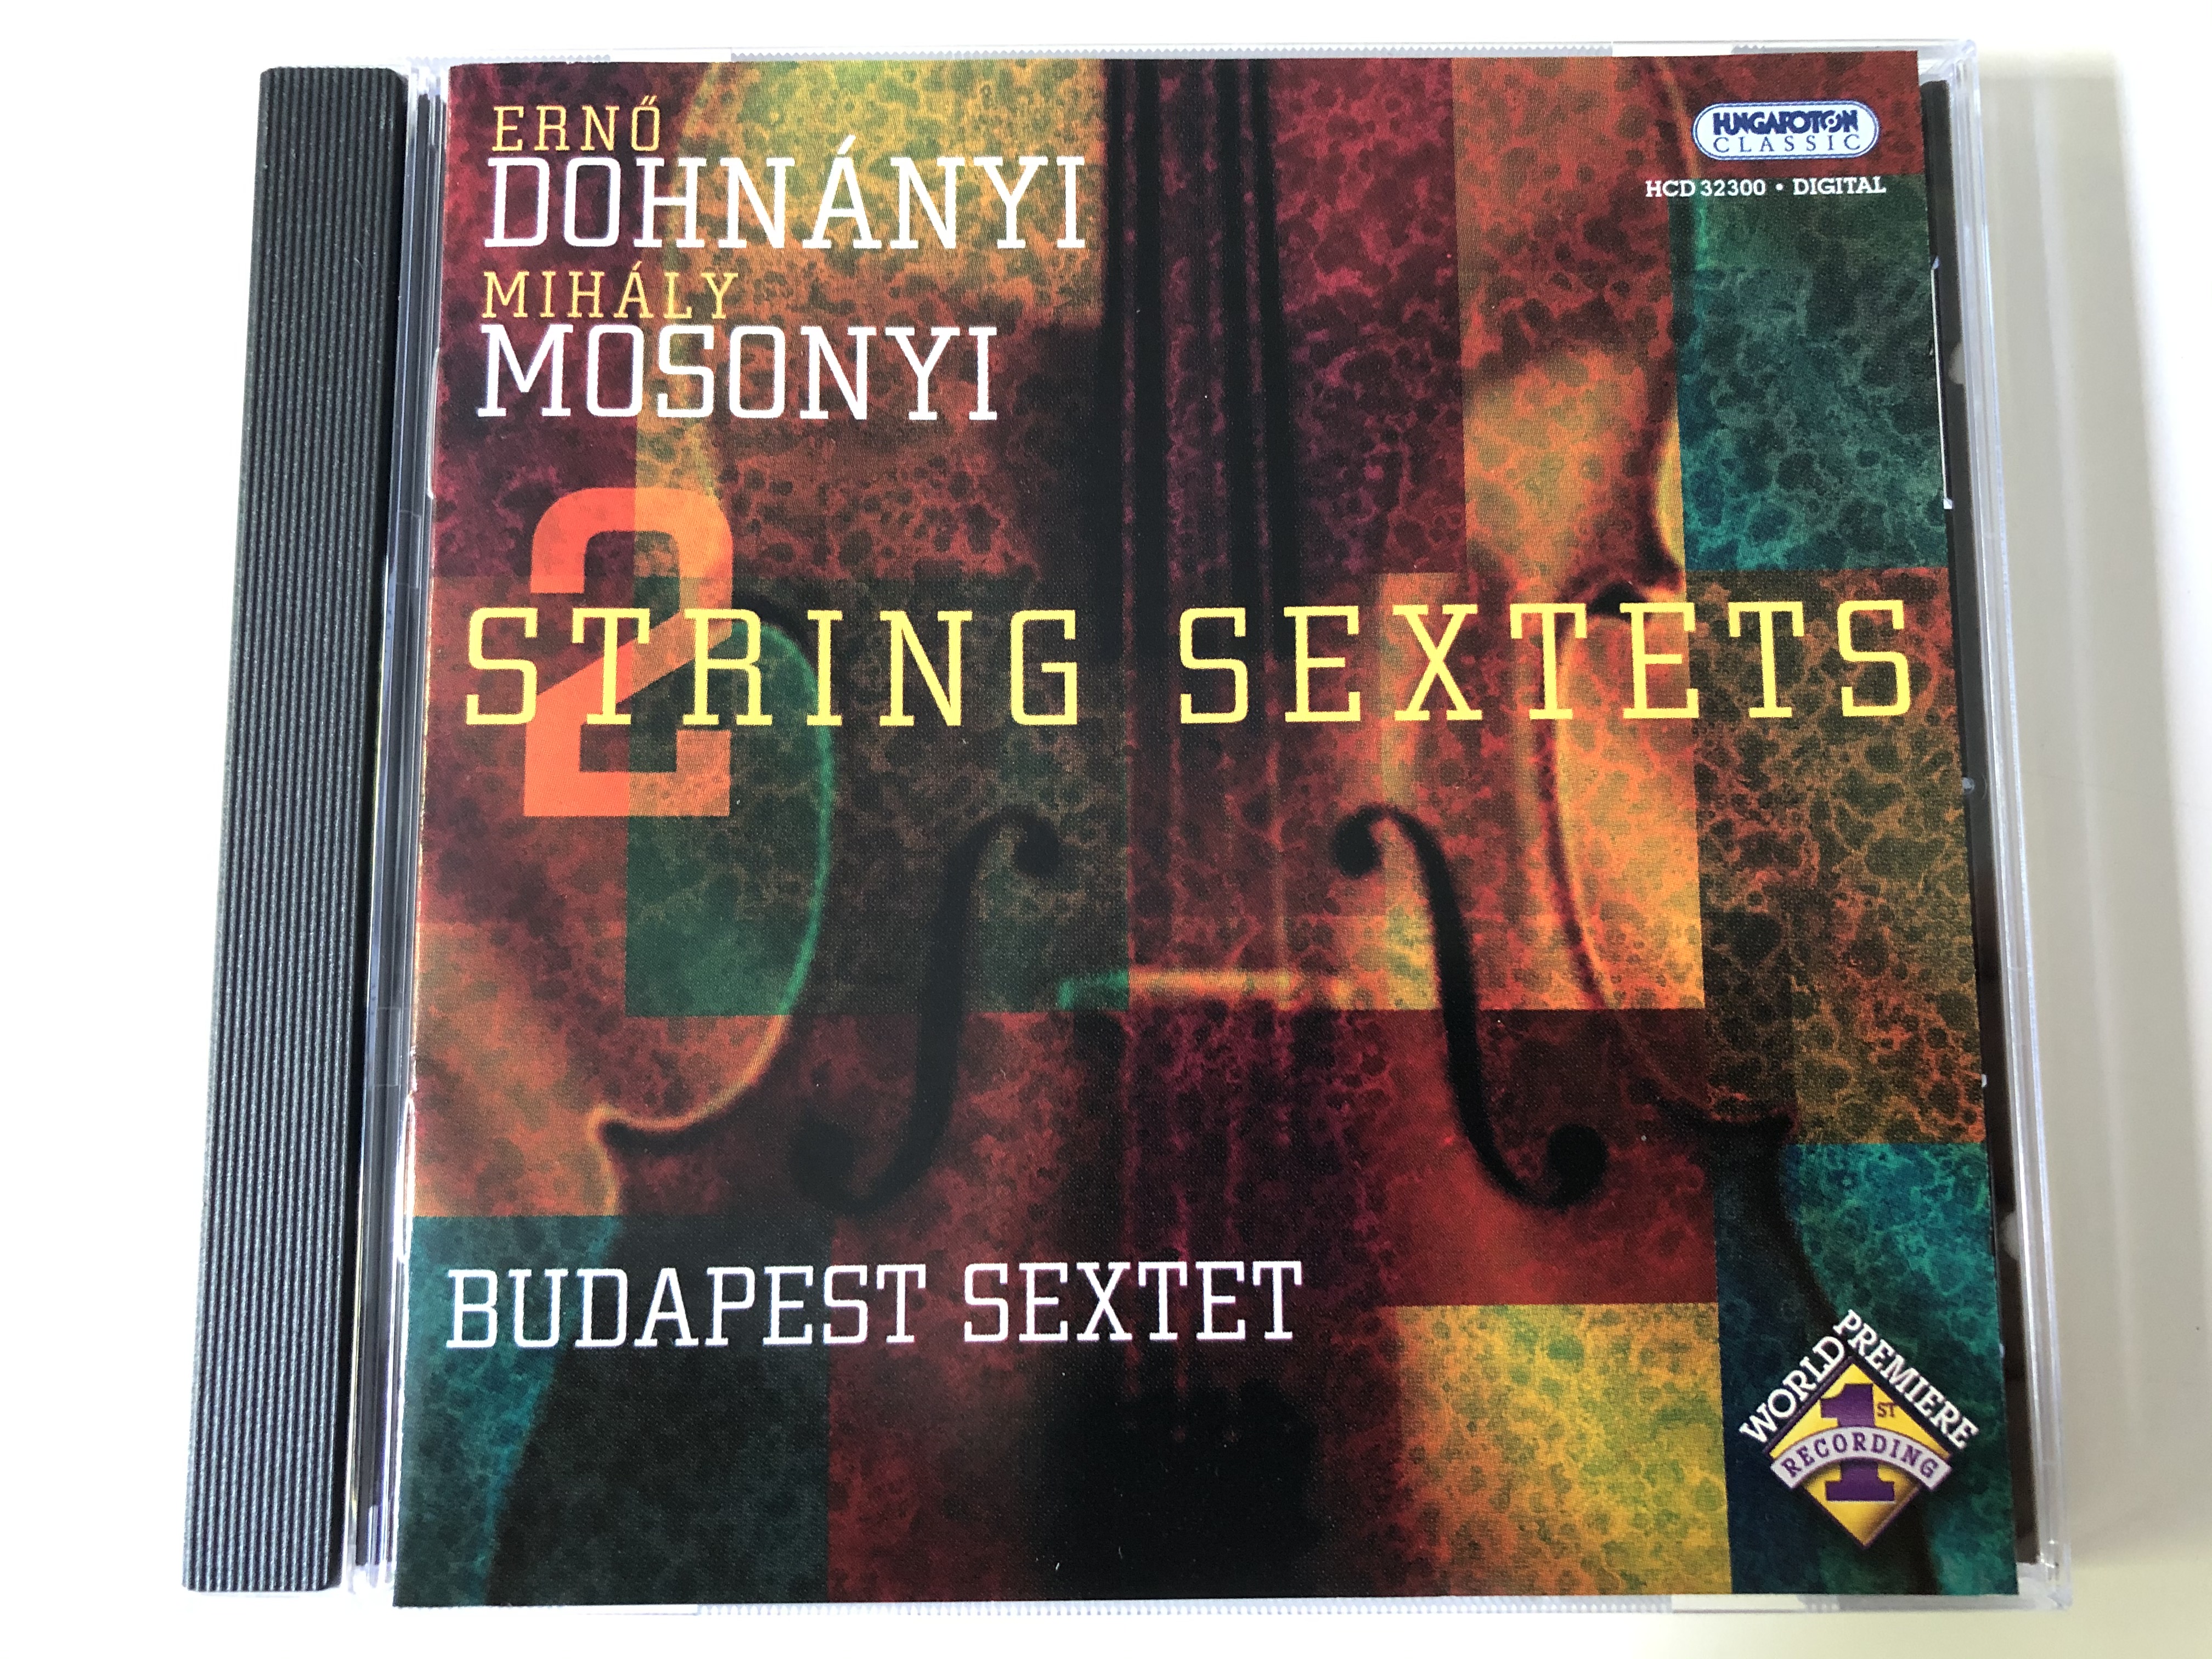 erno-dohnanyi-mihaly-mosonyi-2-string-sextets-budapest-sextet-hungaroton-classic-audio-cd-2006-stereo-hcd-32300-1-.jpg